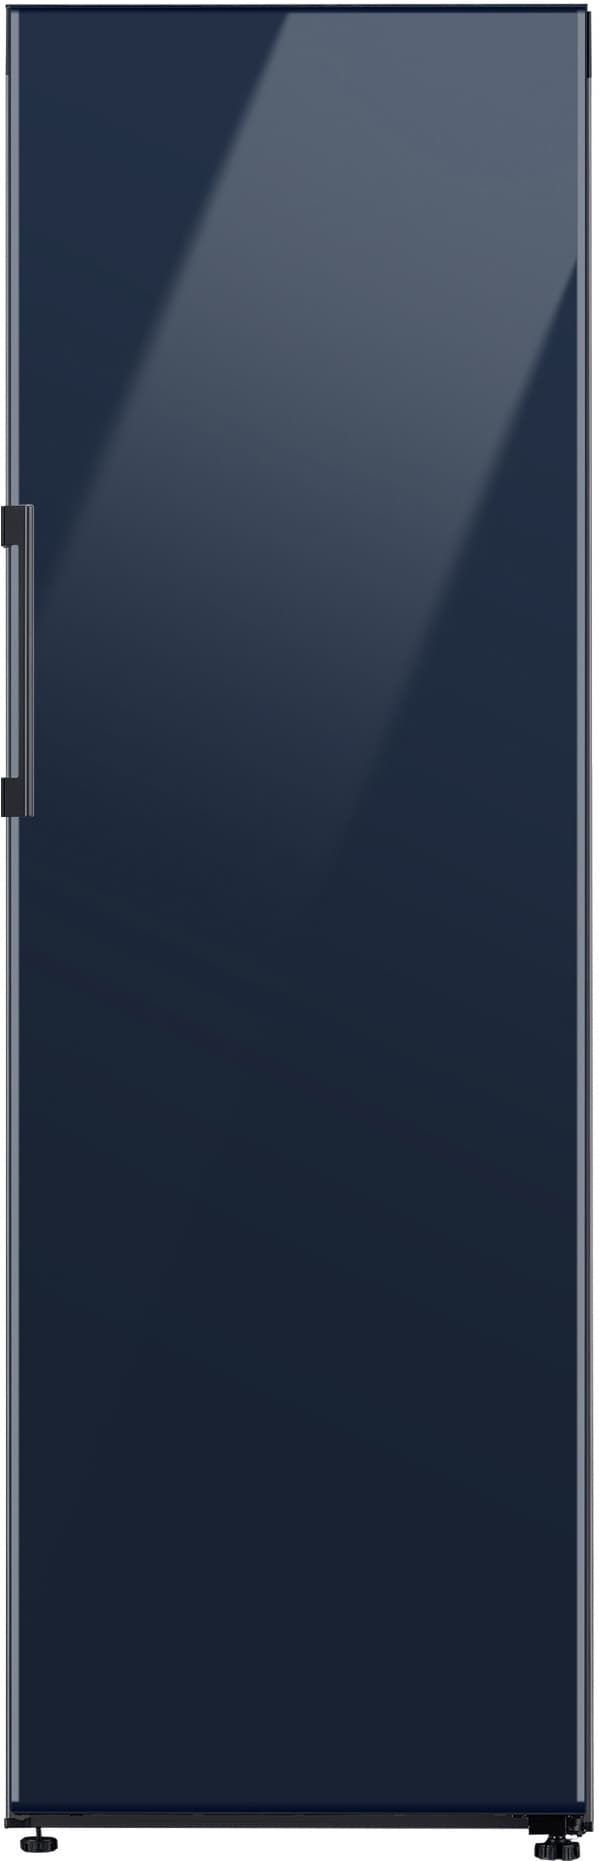 Samsung Bespoke køleskab RR39A746341/EF thumbnail